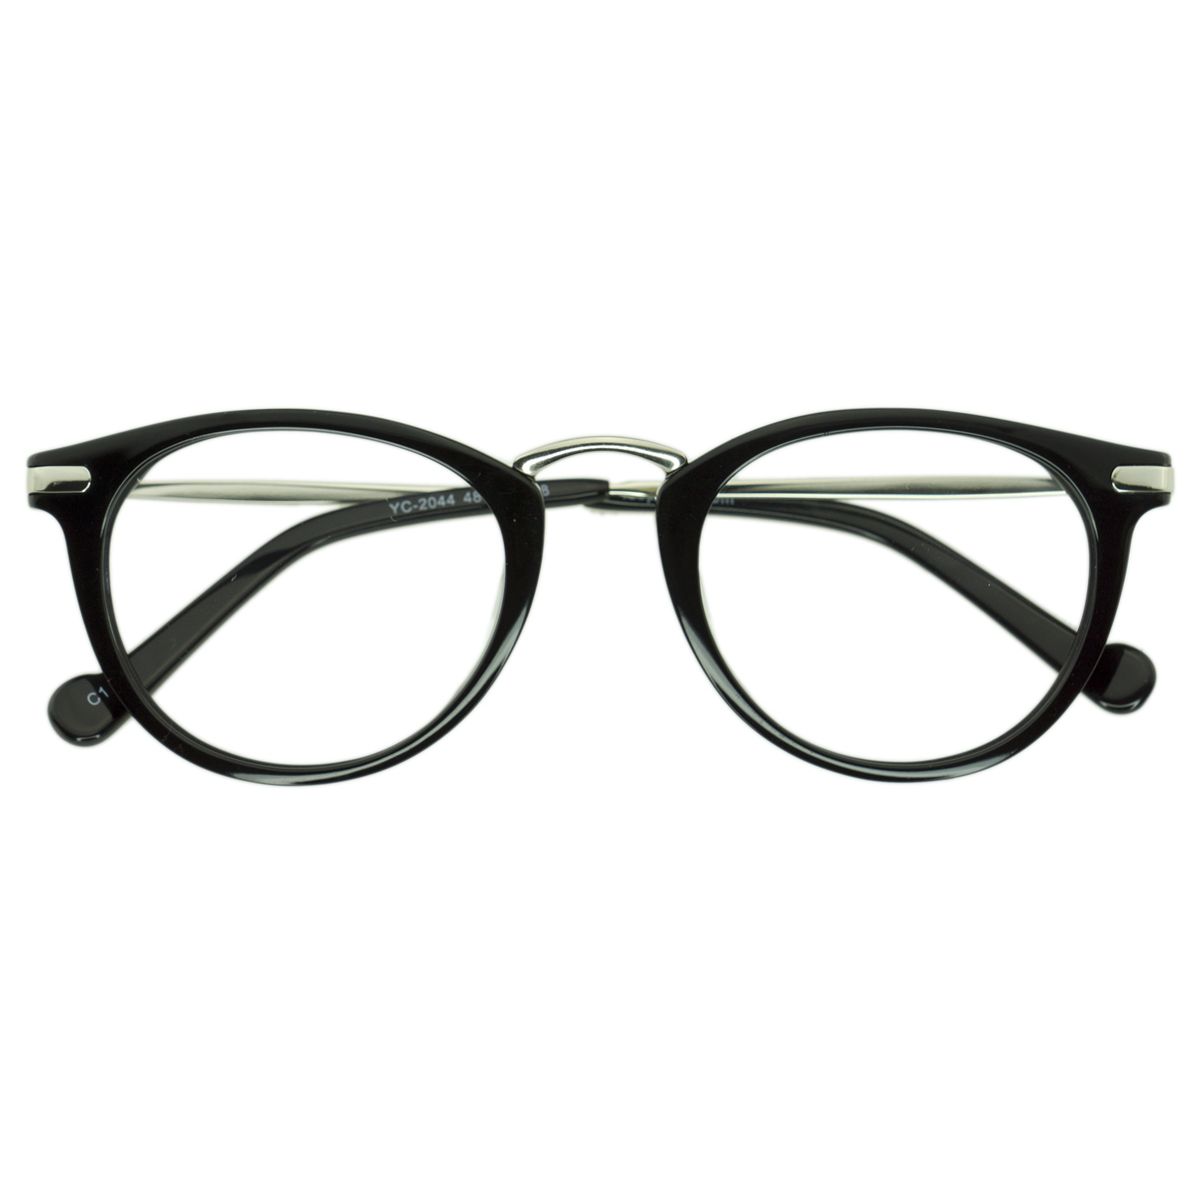 Yc2044 Round Black Eyeglasses Frames Leoptique 4983